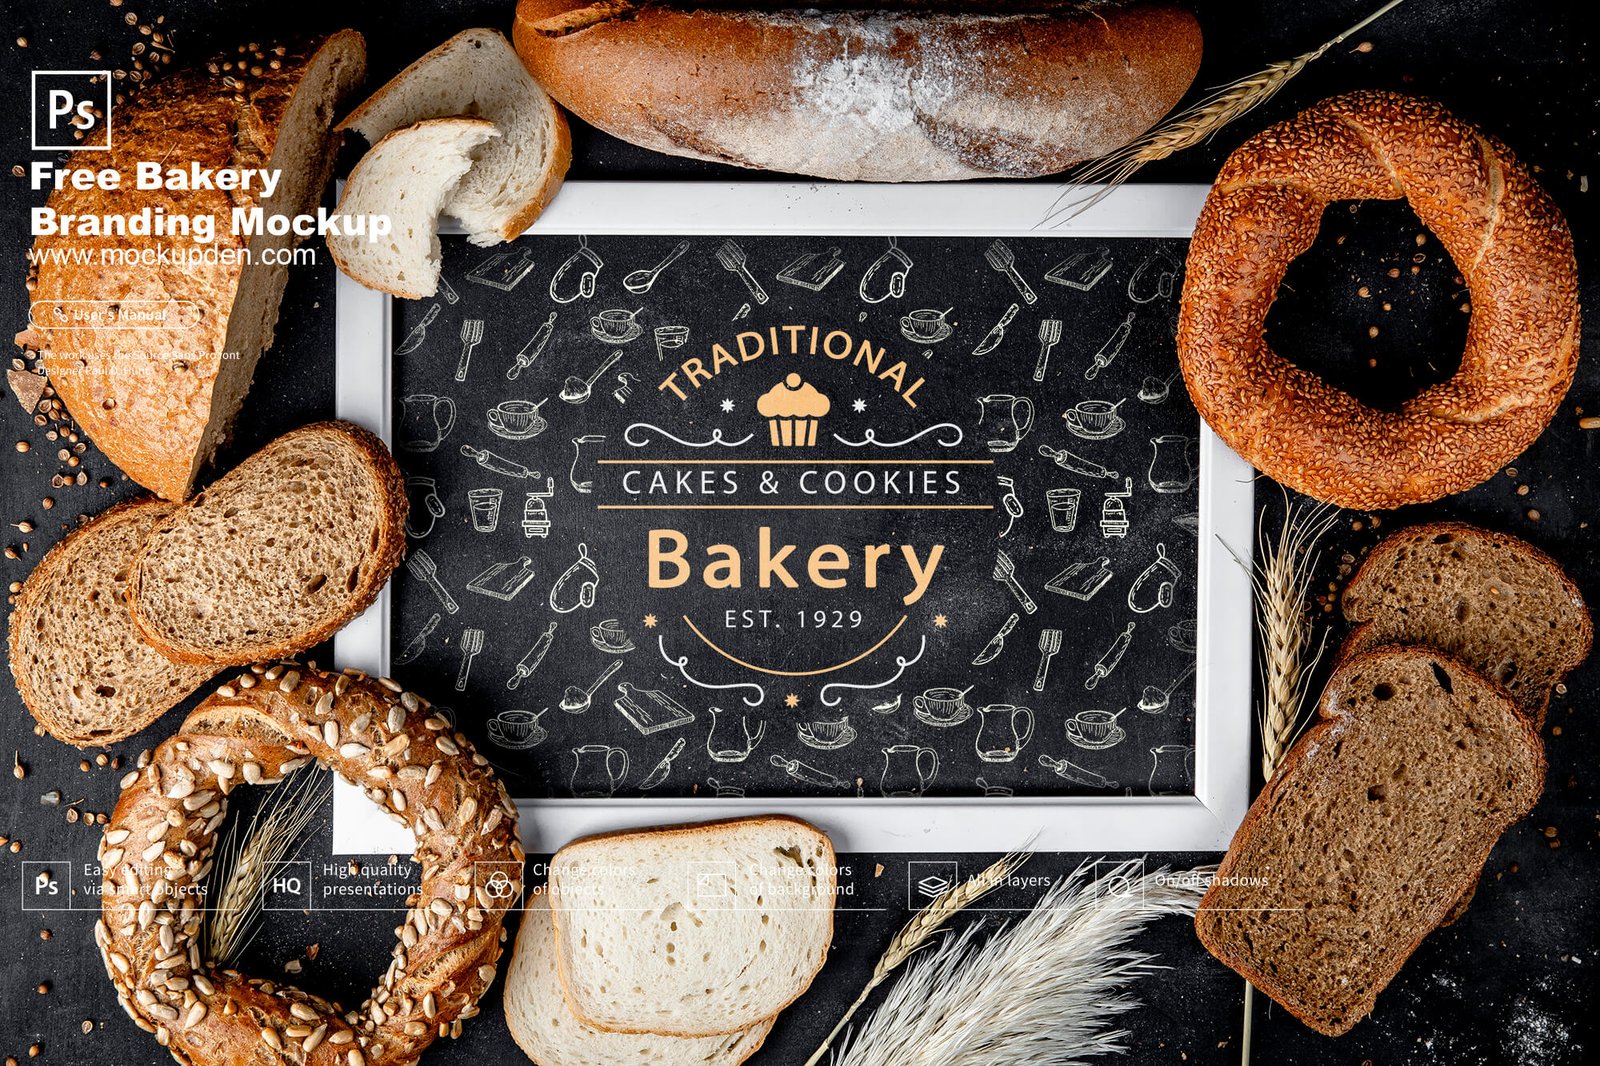 Download Free Bakery Branding Mockup PSD Template | Mockup Den